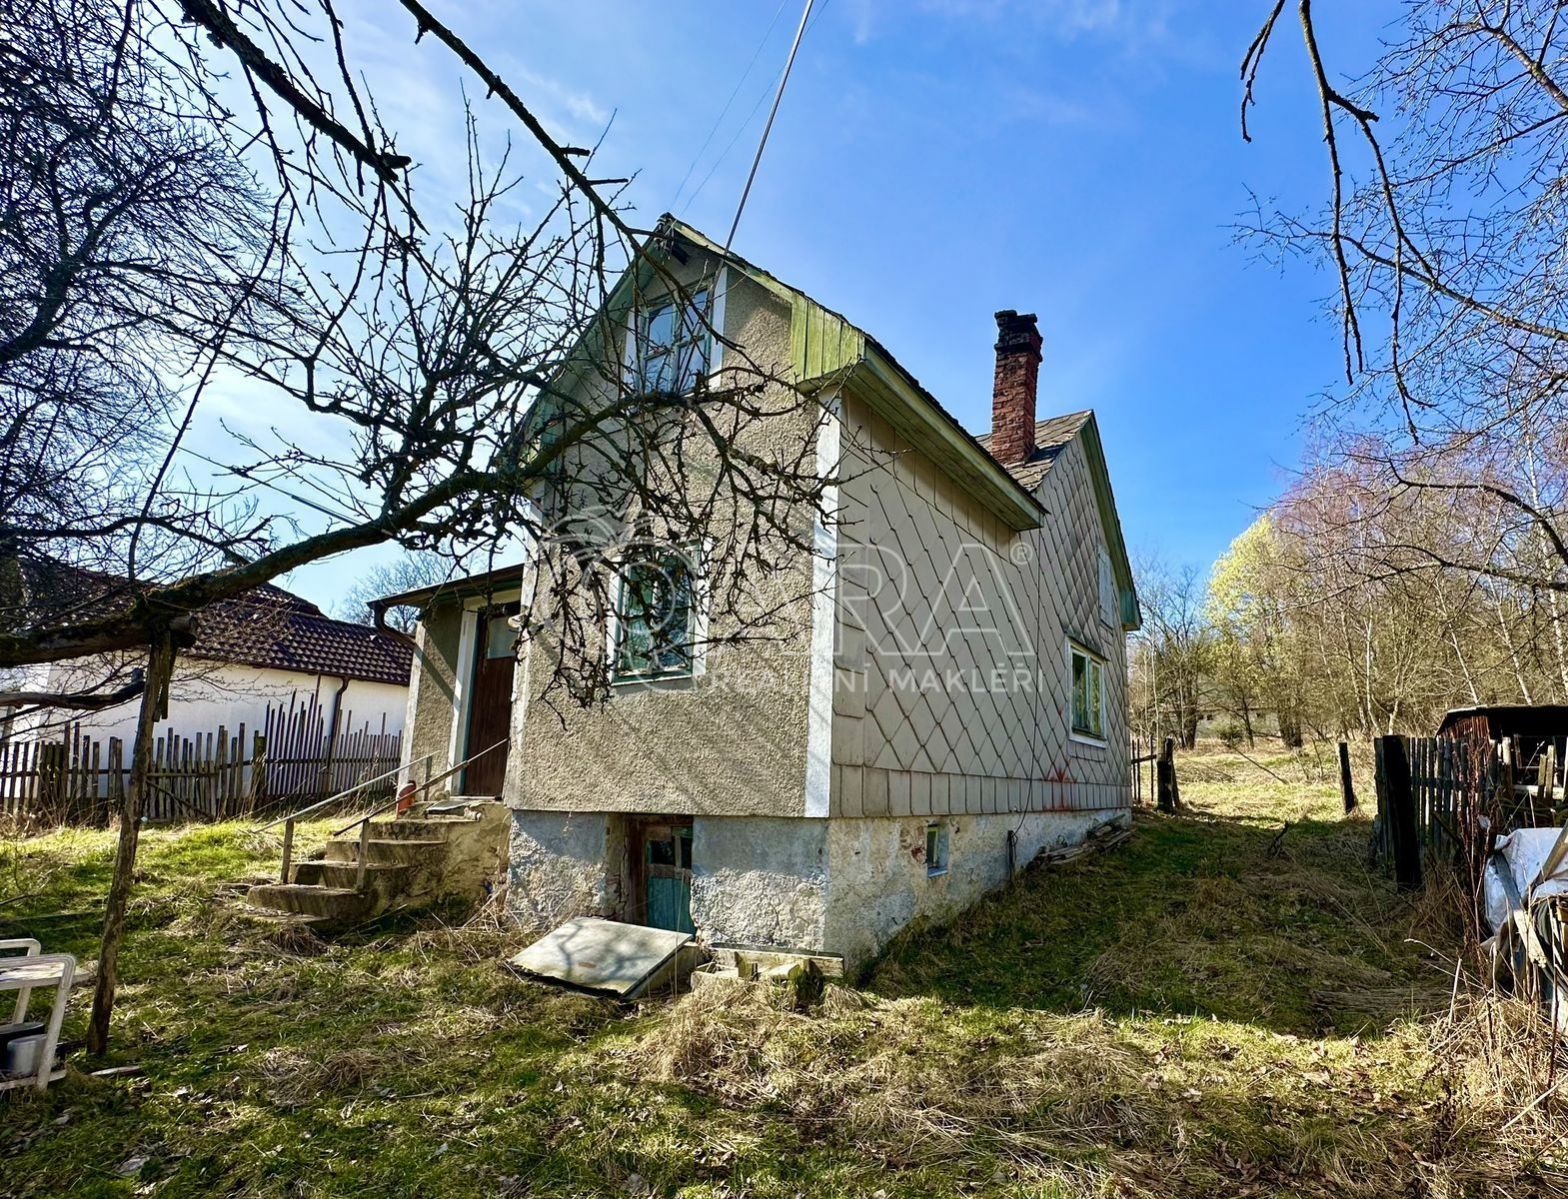 Prodej rodinný dům 83 m2, pozemek 890m2-obec Vacov - Rohanov, obrázek č. 1